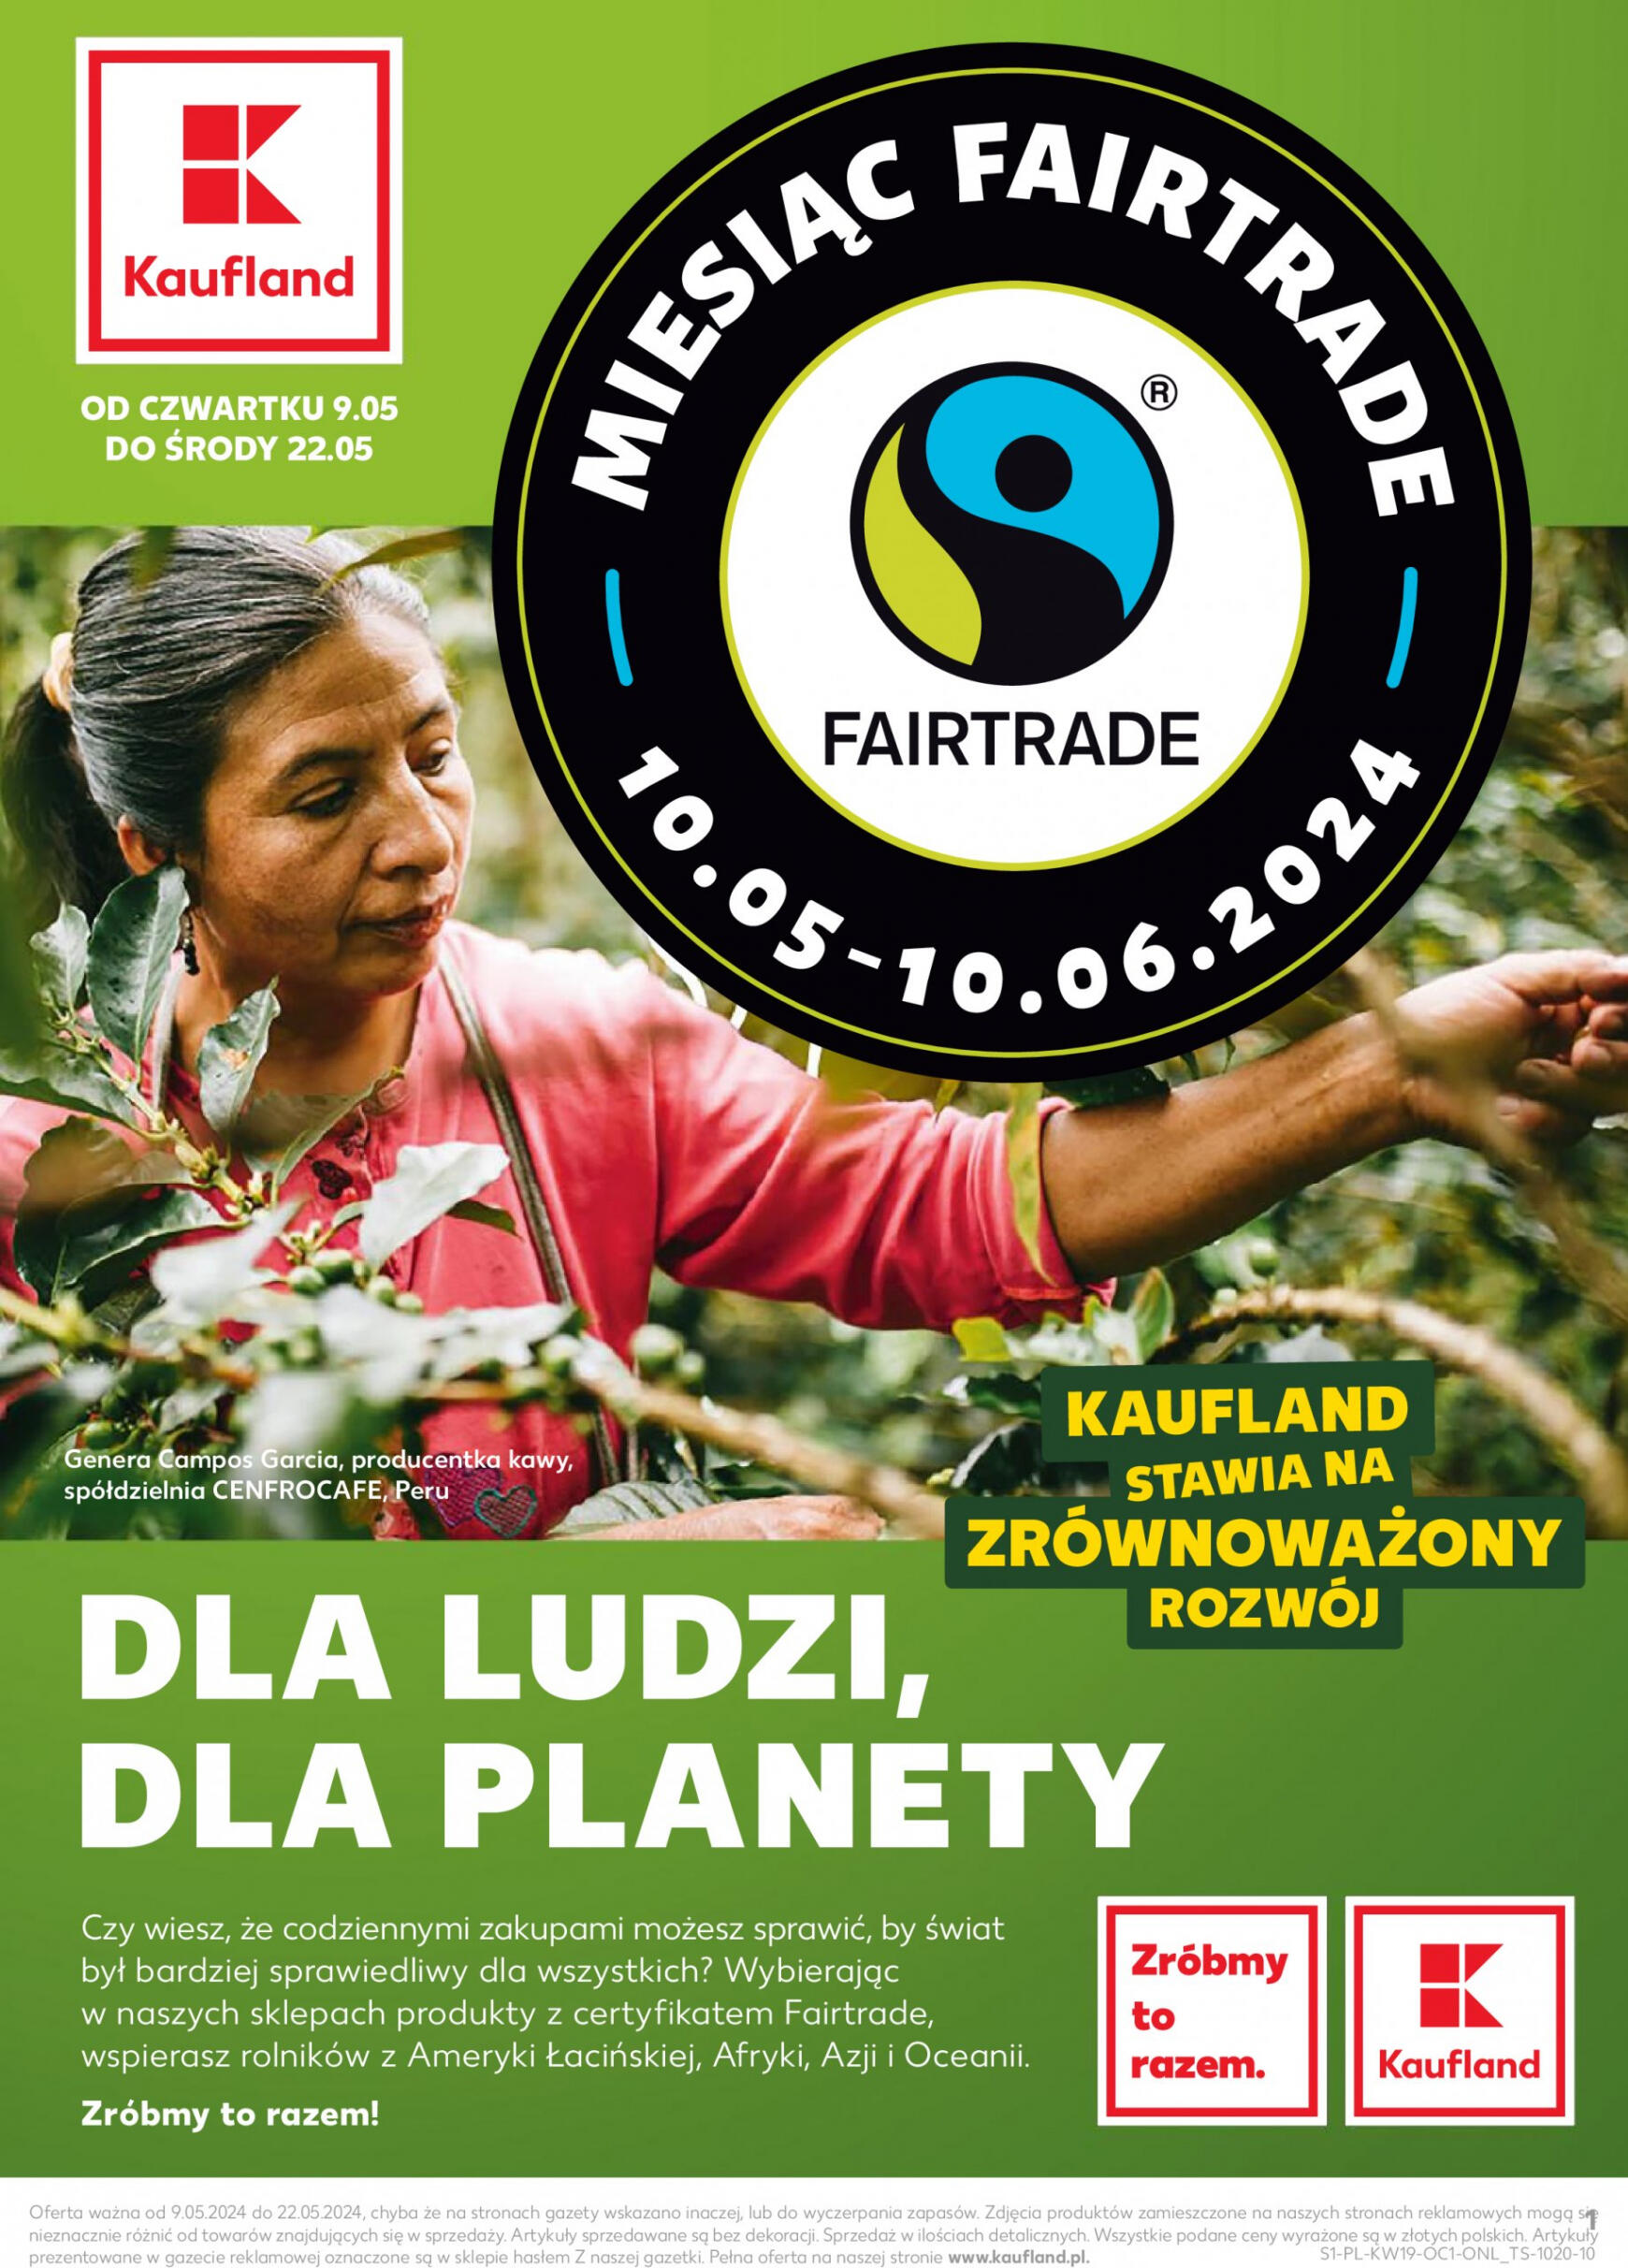 kaufland - Kaufland - Mesiąc Fairtrade gazetka aktualna ważna od 09.05. - 22.05. - page: 1